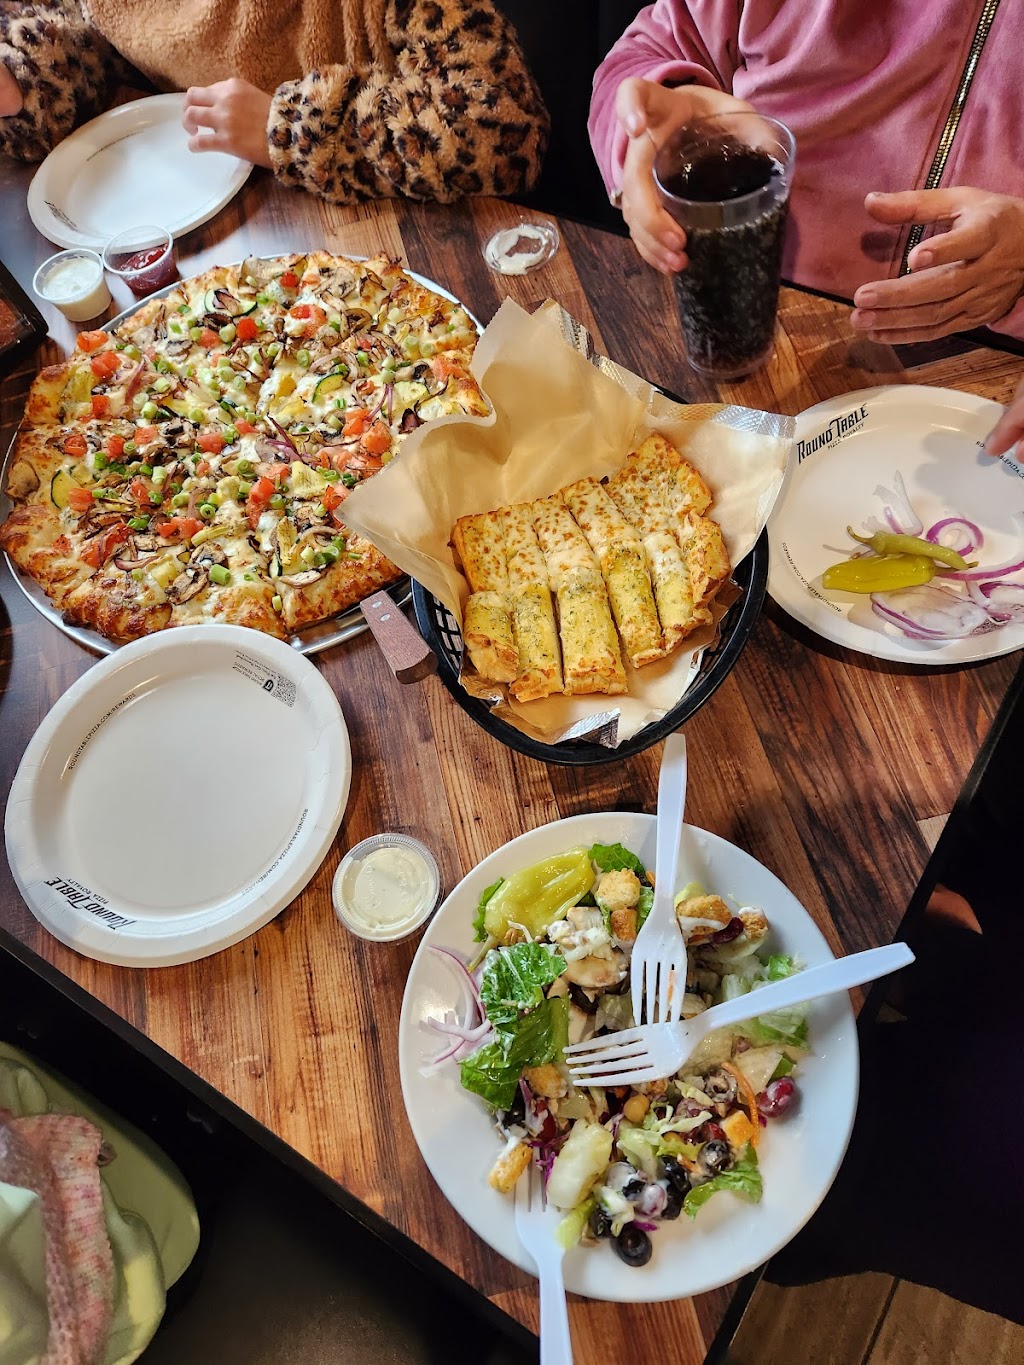 Round Table Pizza | 15960 Hesperian Blvd, San Lorenzo, CA 94580 | Phone: (510) 278-6311